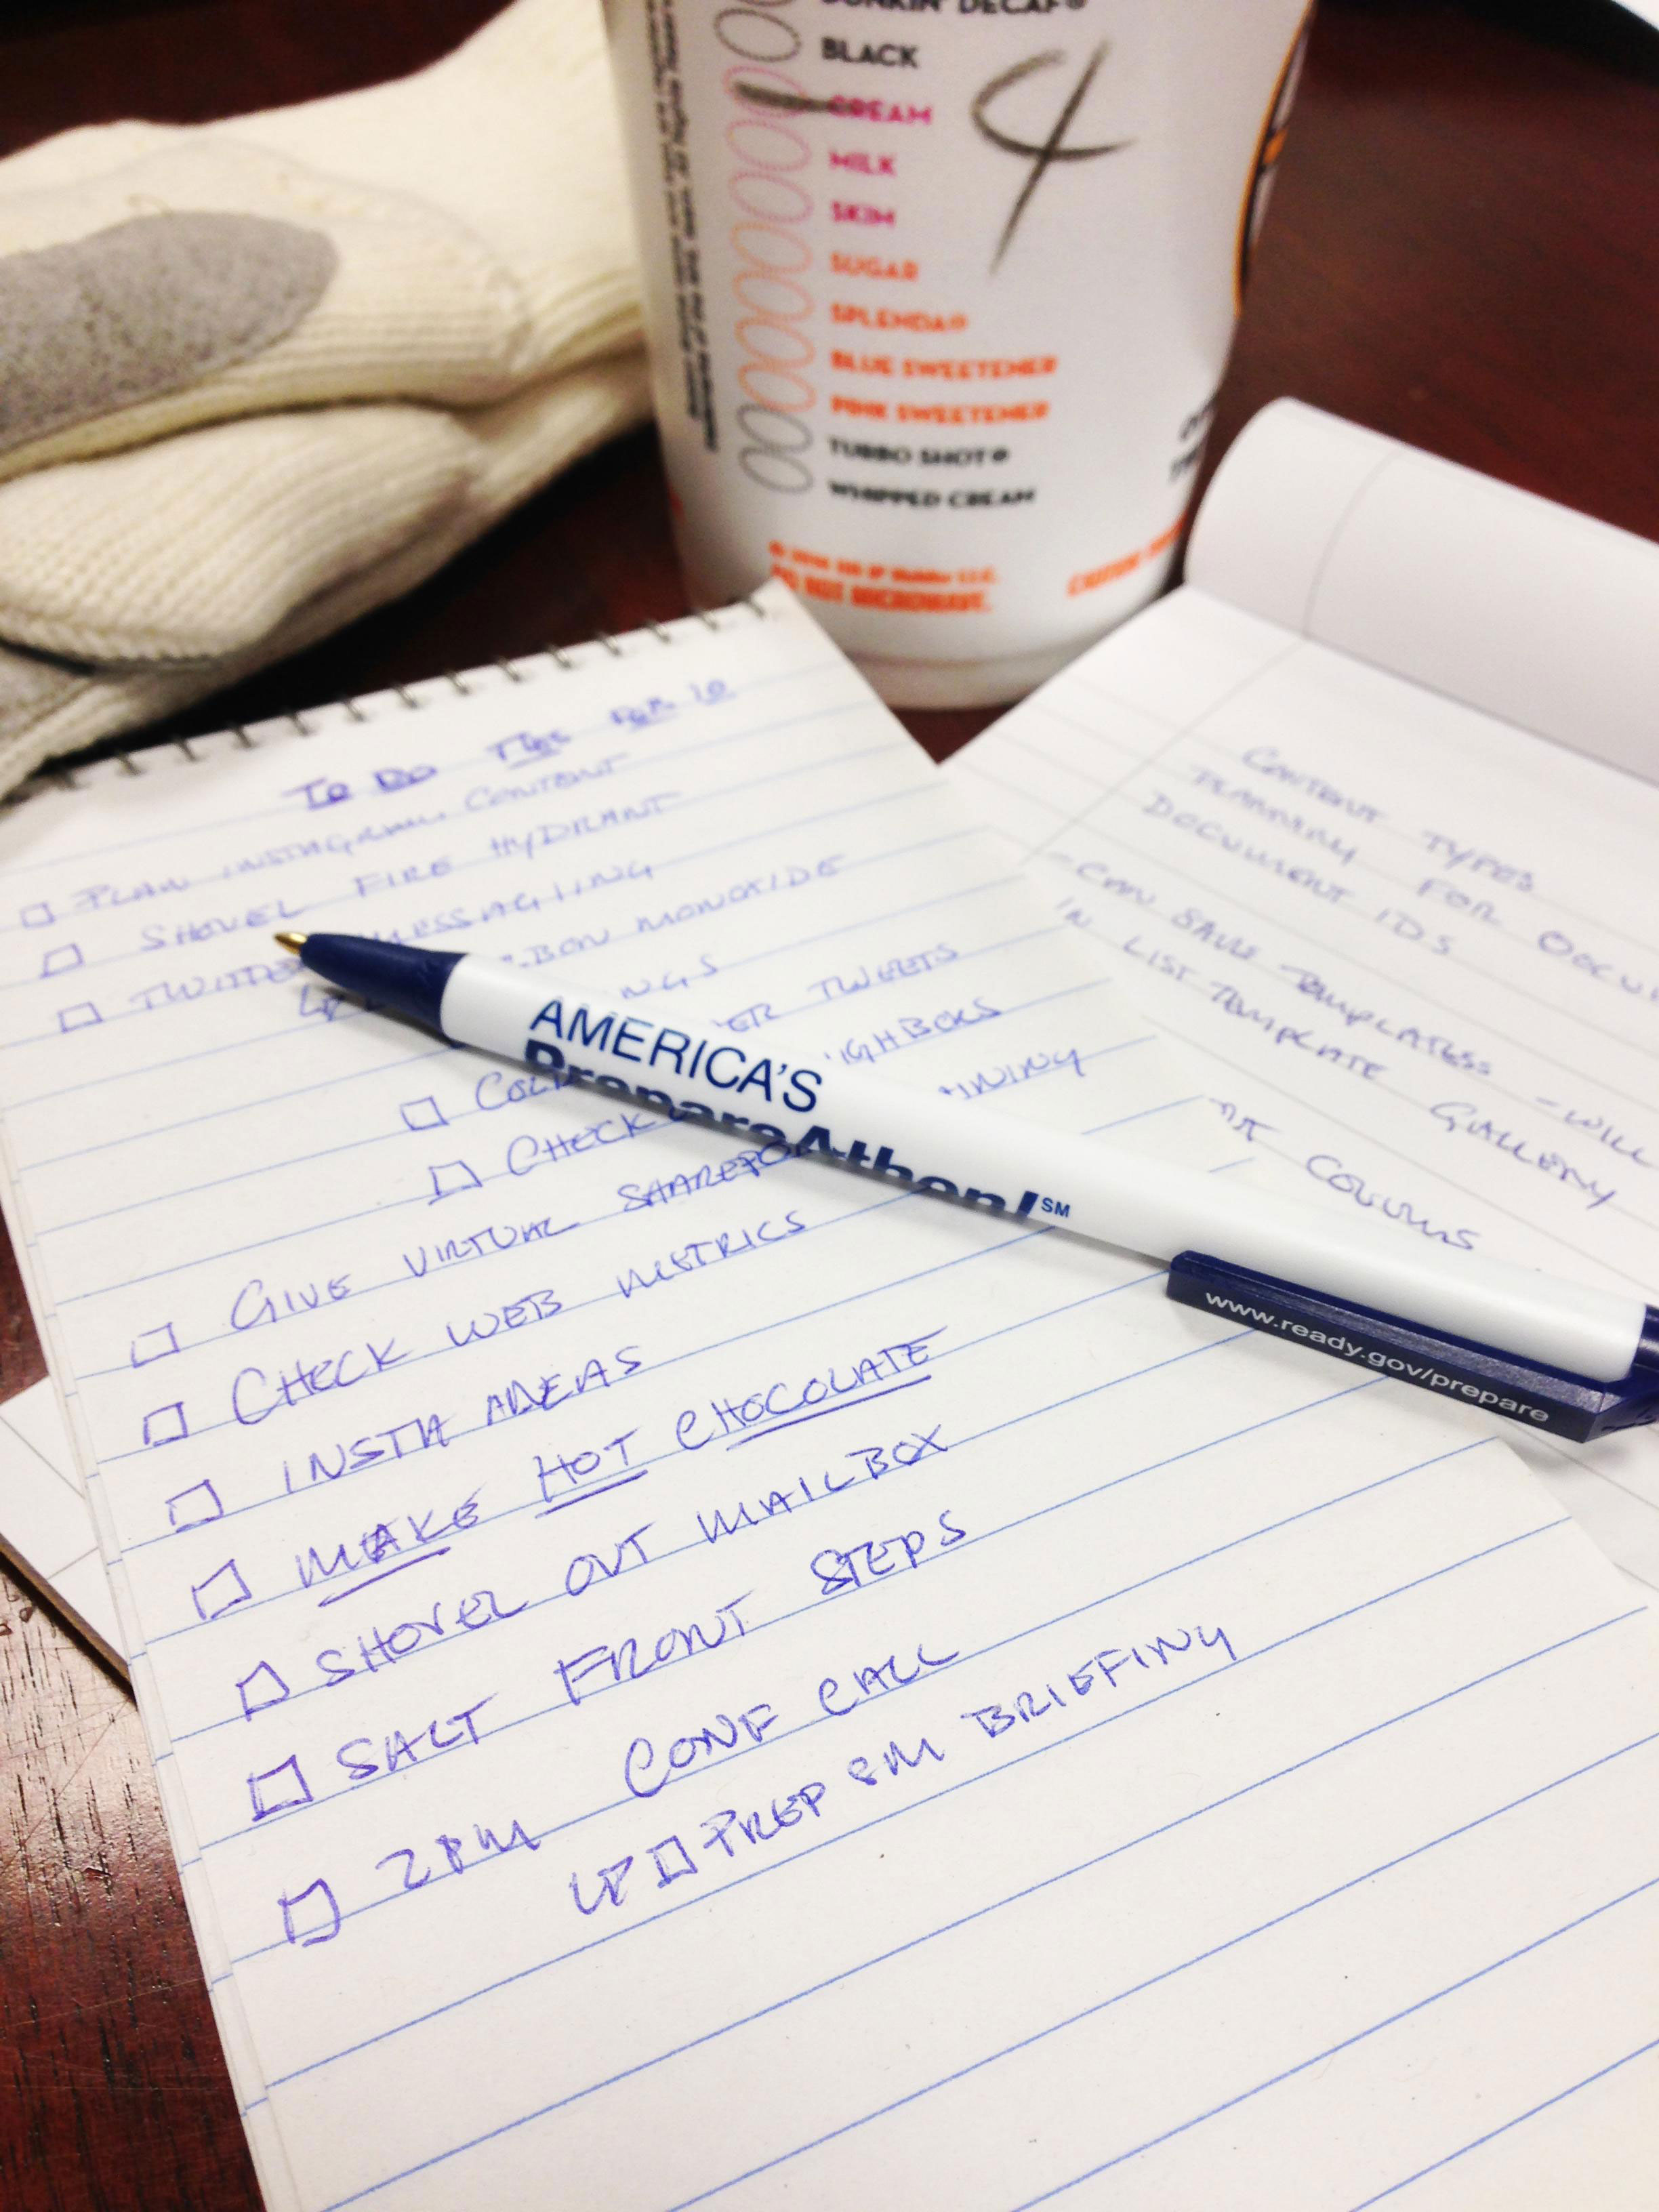 a business checklist written on a pad with a pen. Photo by Eilis Maynard, FEMA